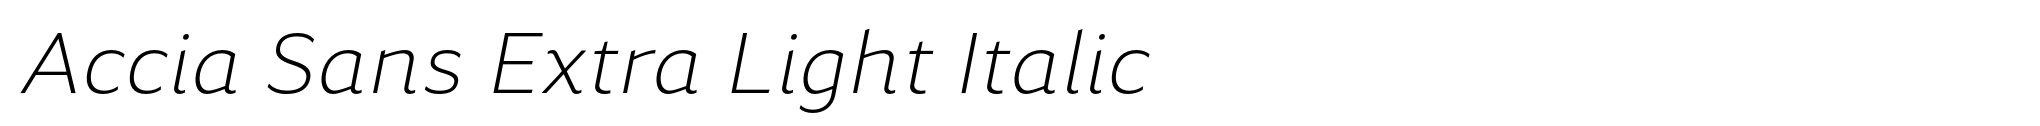 Accia Sans Extra Light Italic image